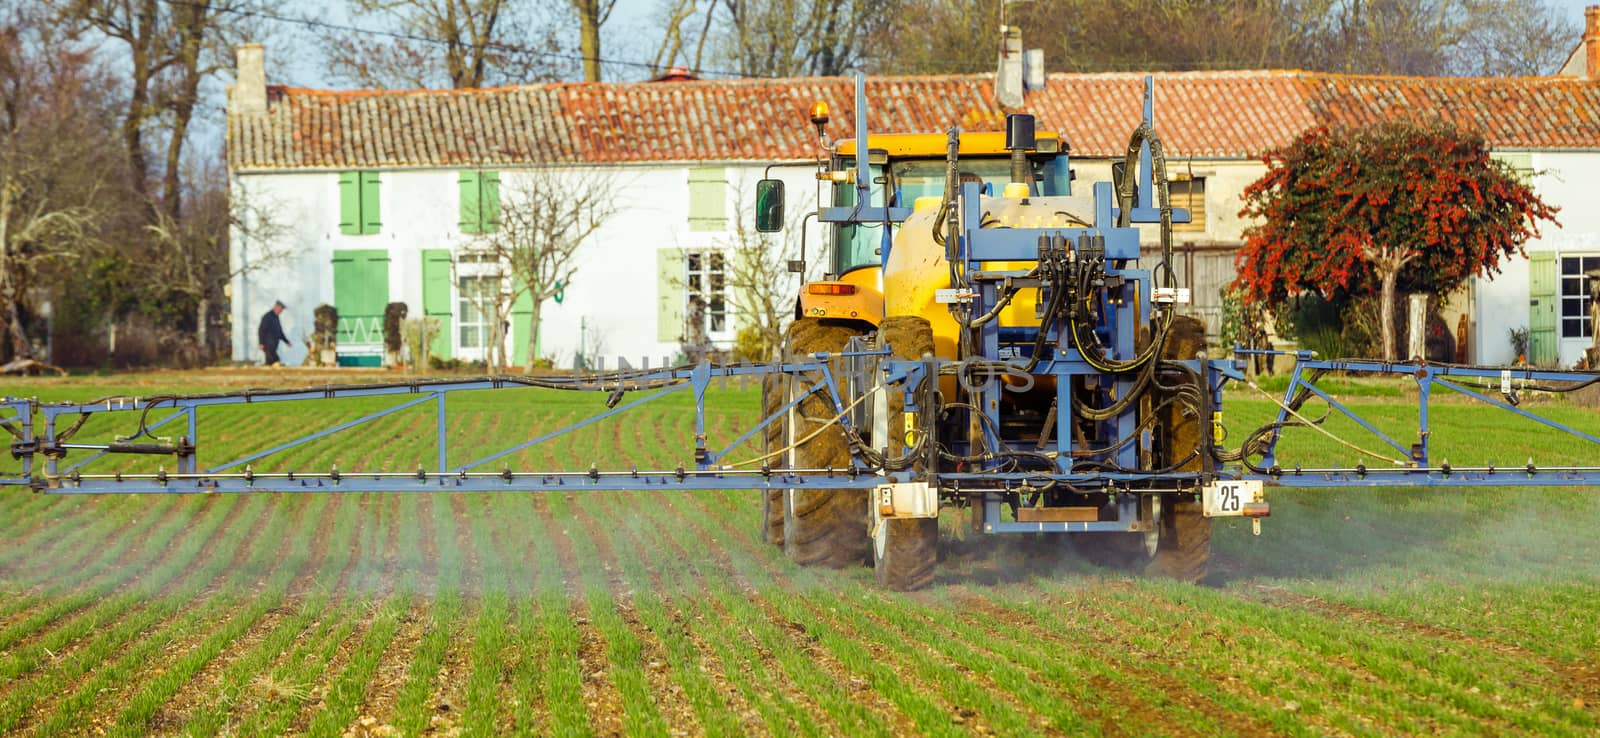 Tractor spraying wheat field with sprayer by pixinoo